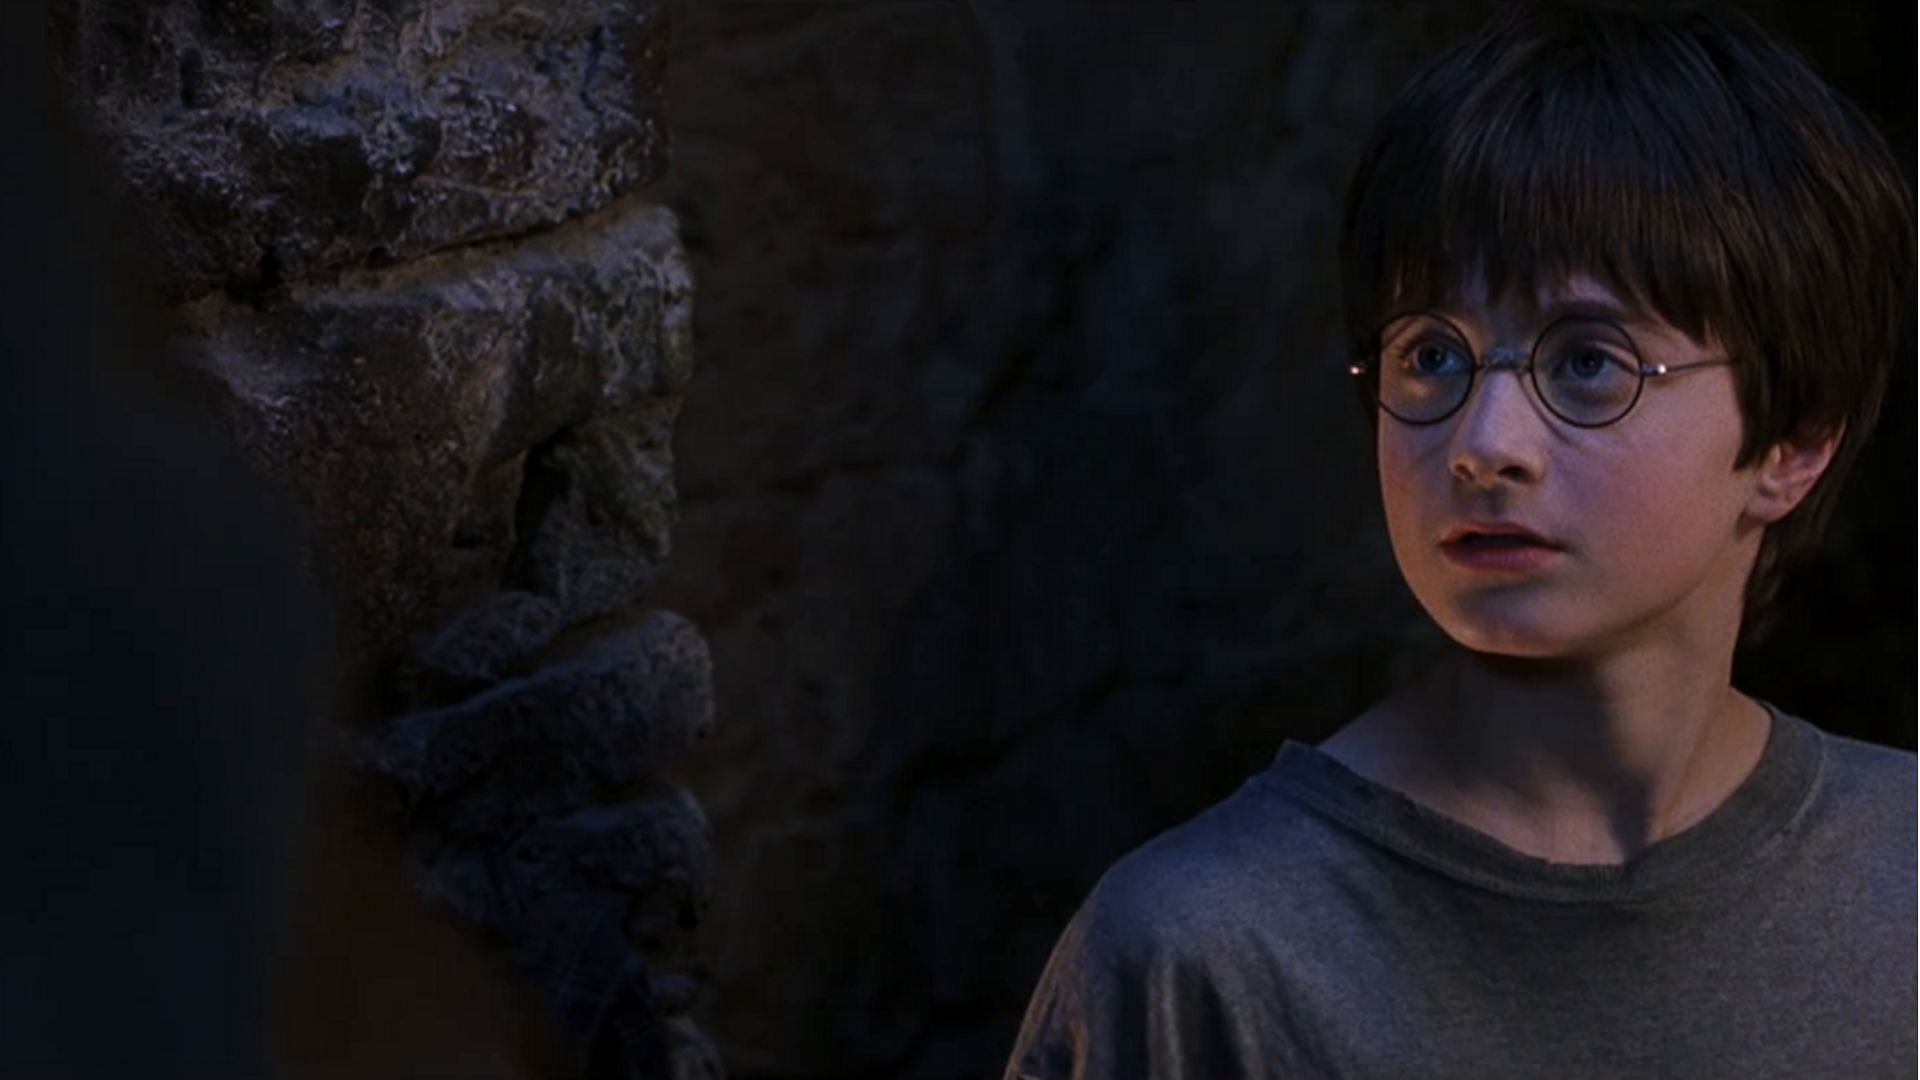 Daniel Radcliffe as Harry Potter (Image via Prime Video)